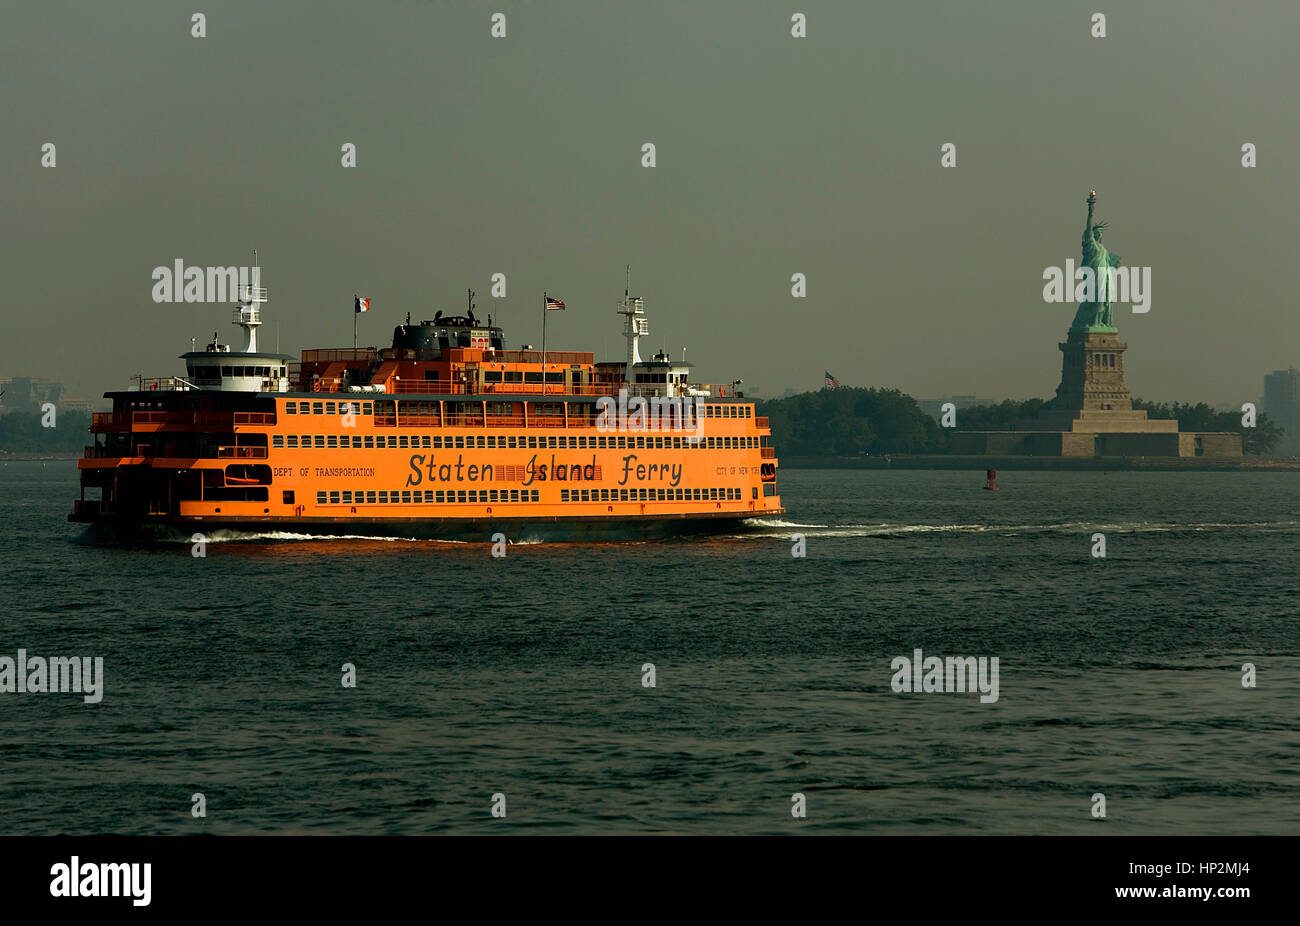 Statue of Liberty and Staten Island ferry,New York City, USA Stock Photo